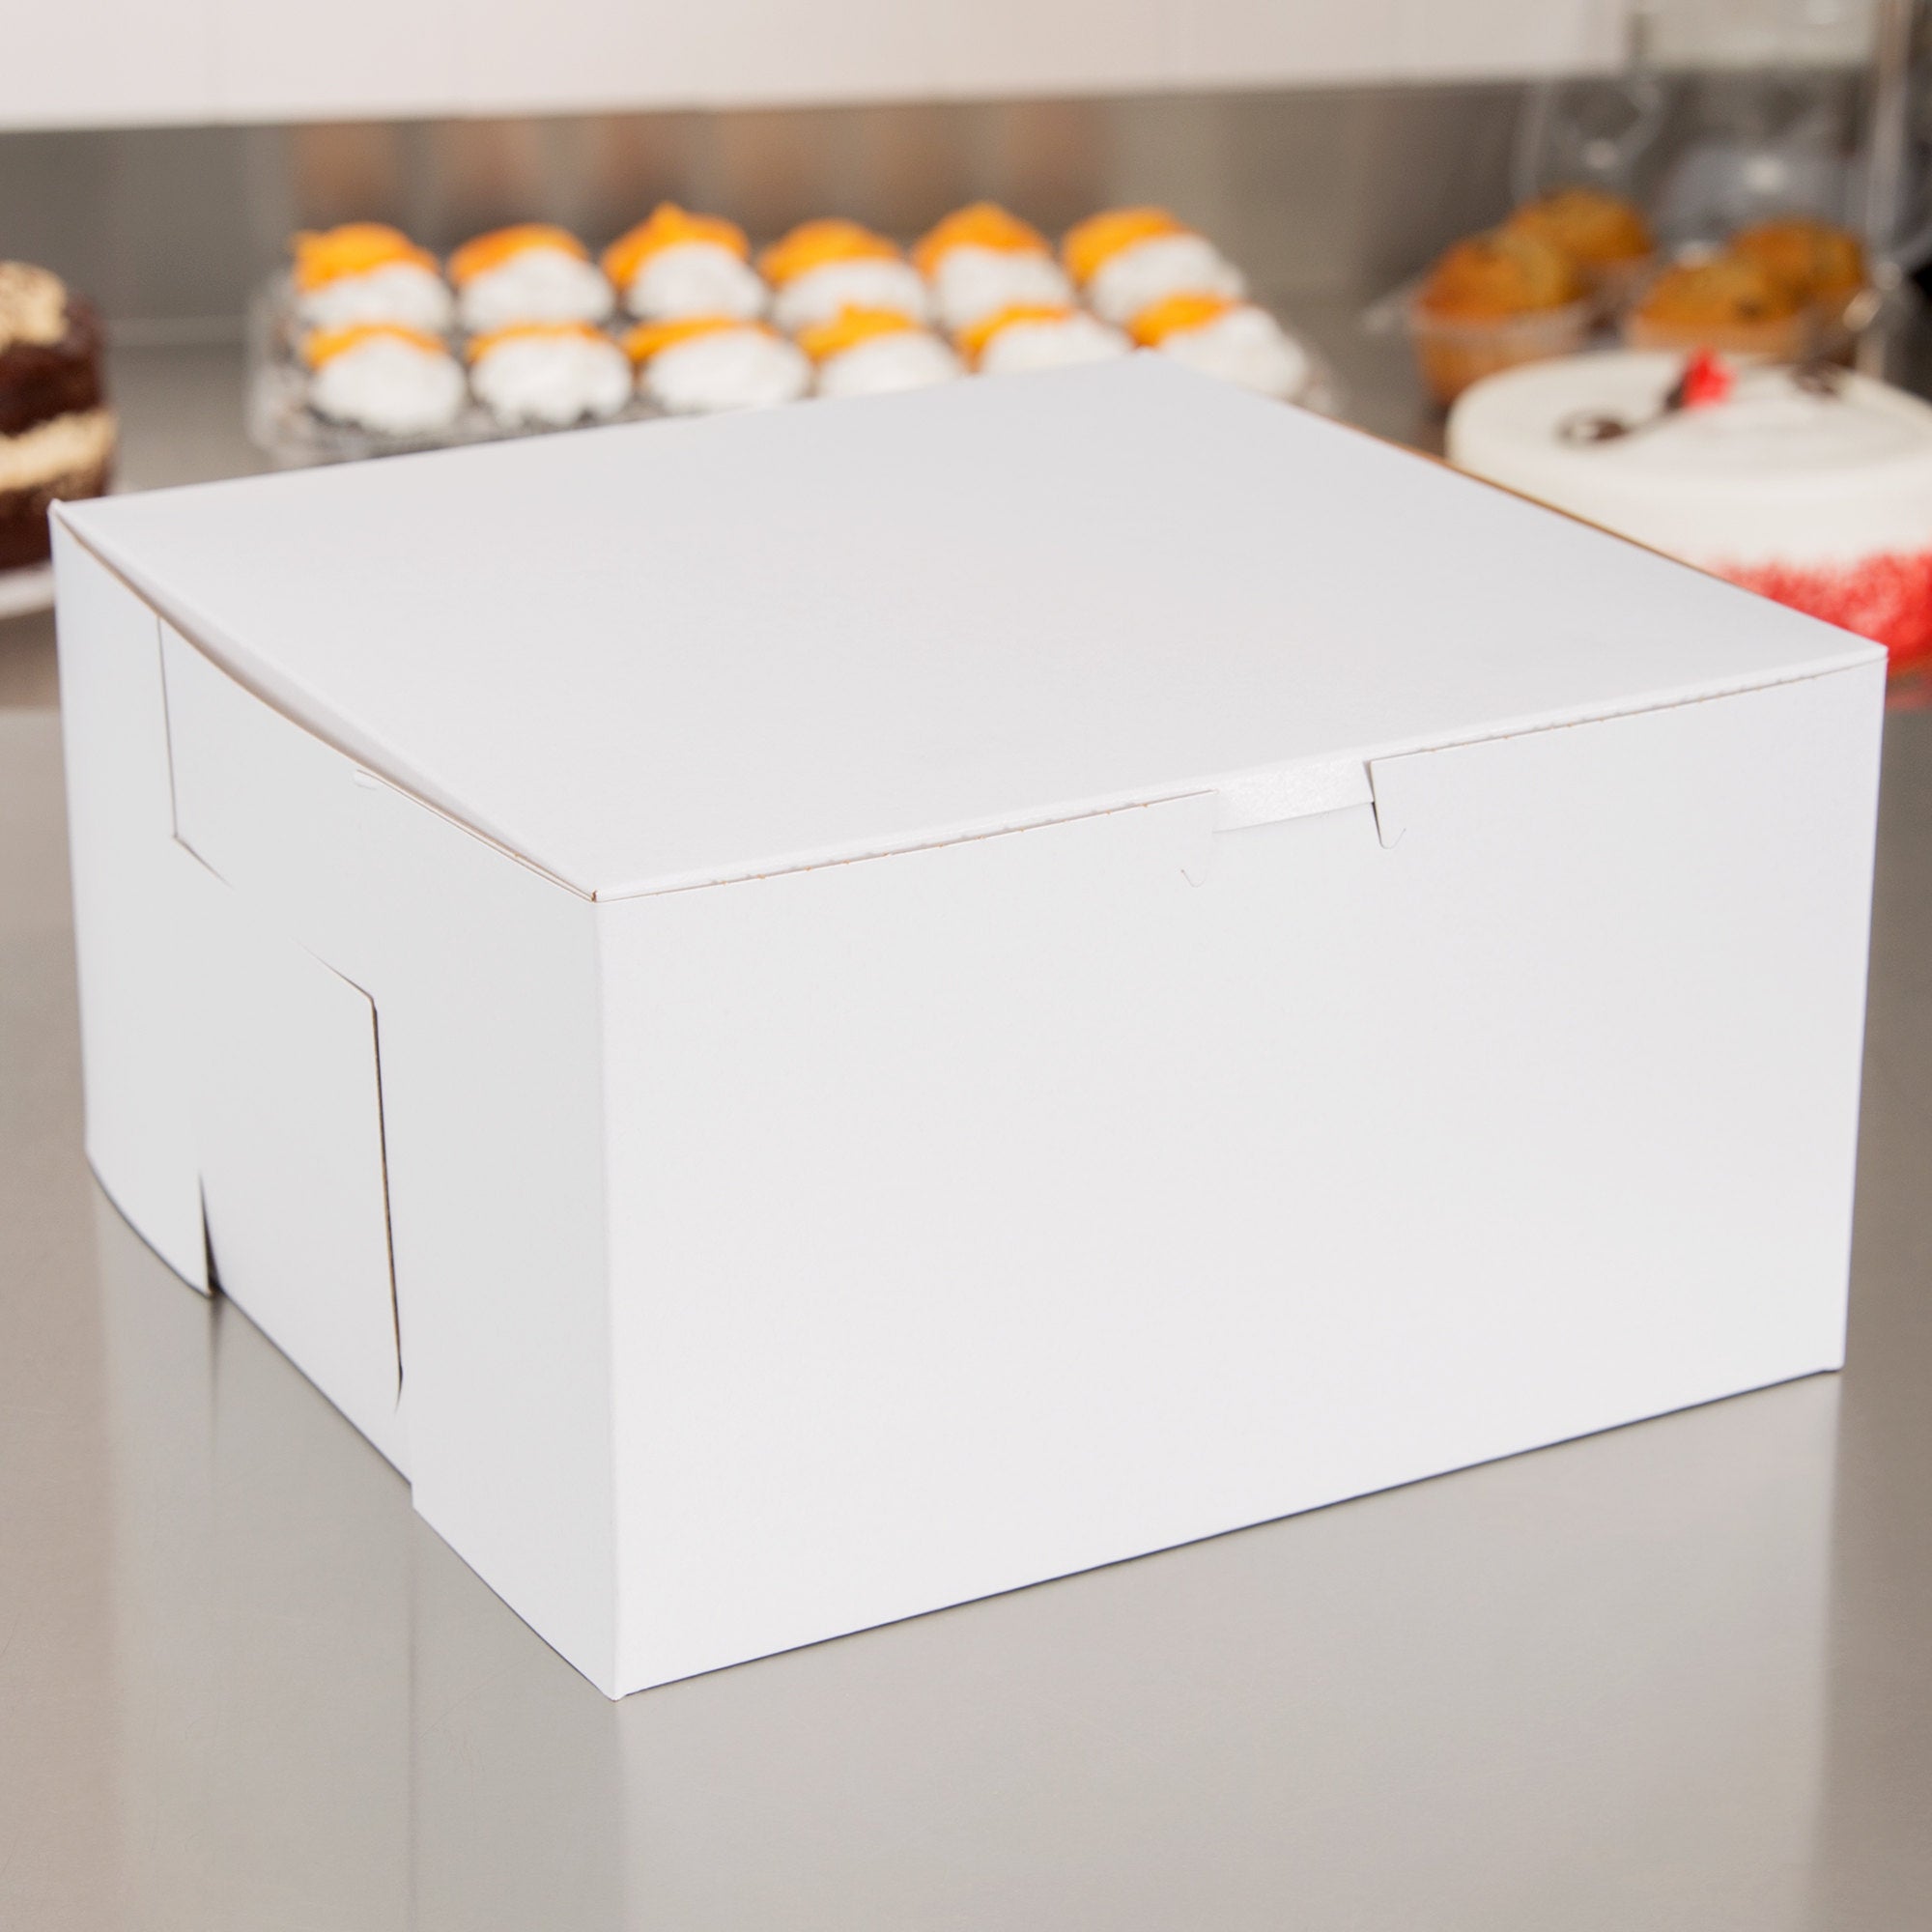 14 Inch Cake Box - 14x14x6